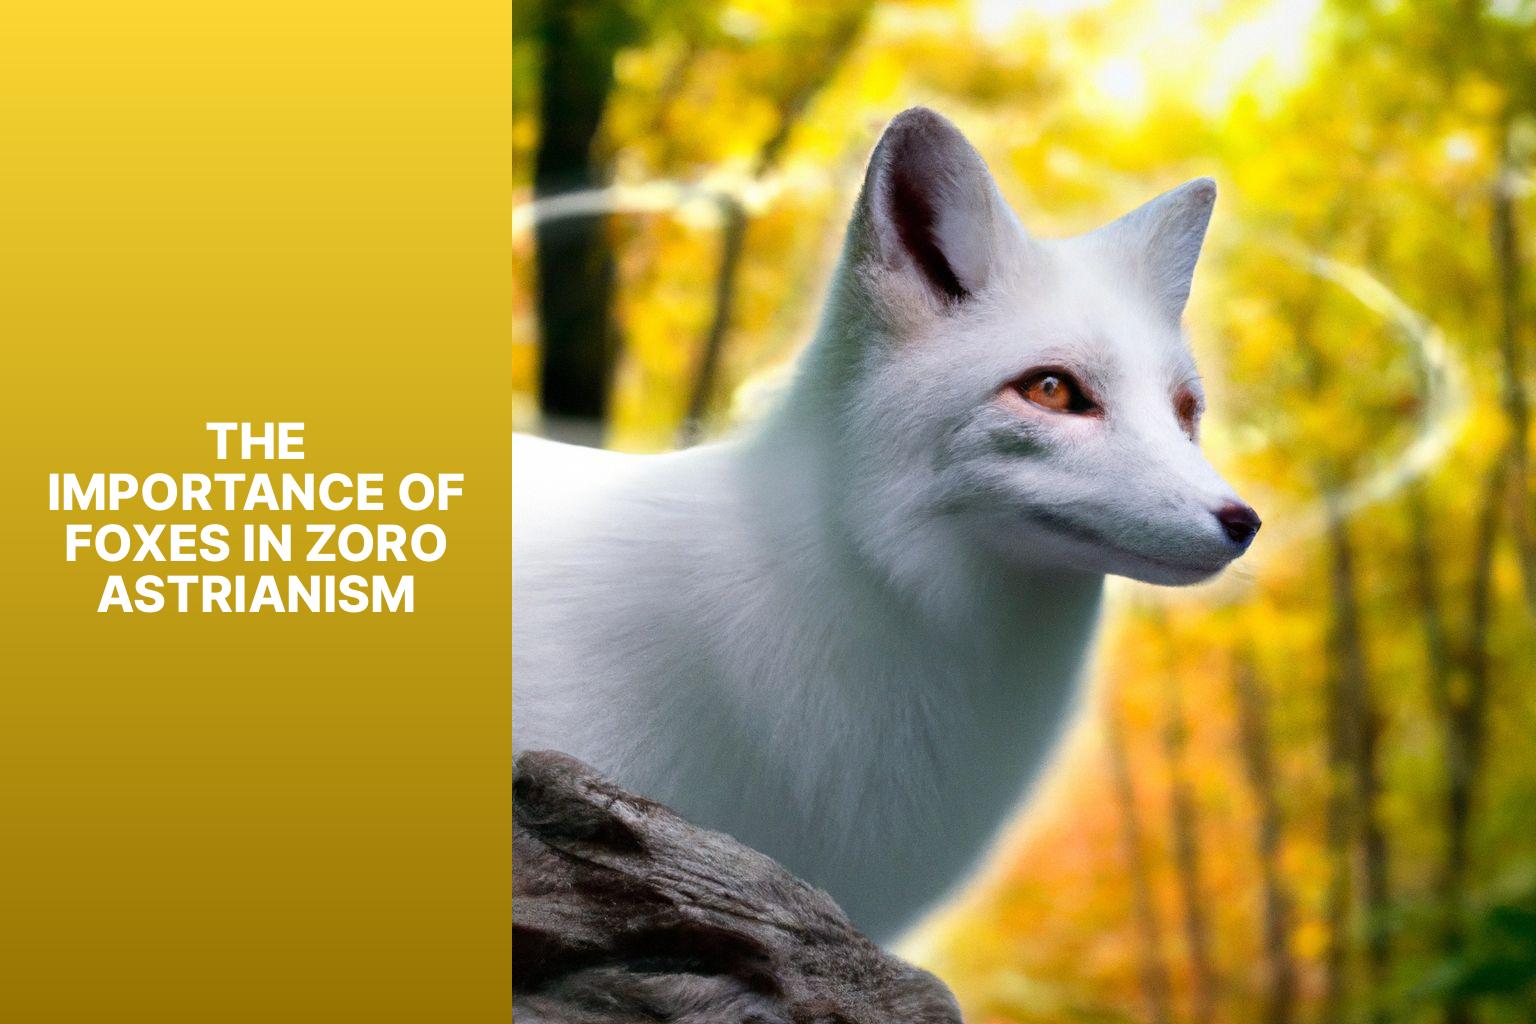 The Importance of Foxes in Zoroastrianism - Fox Myths in Zoroastrianism 